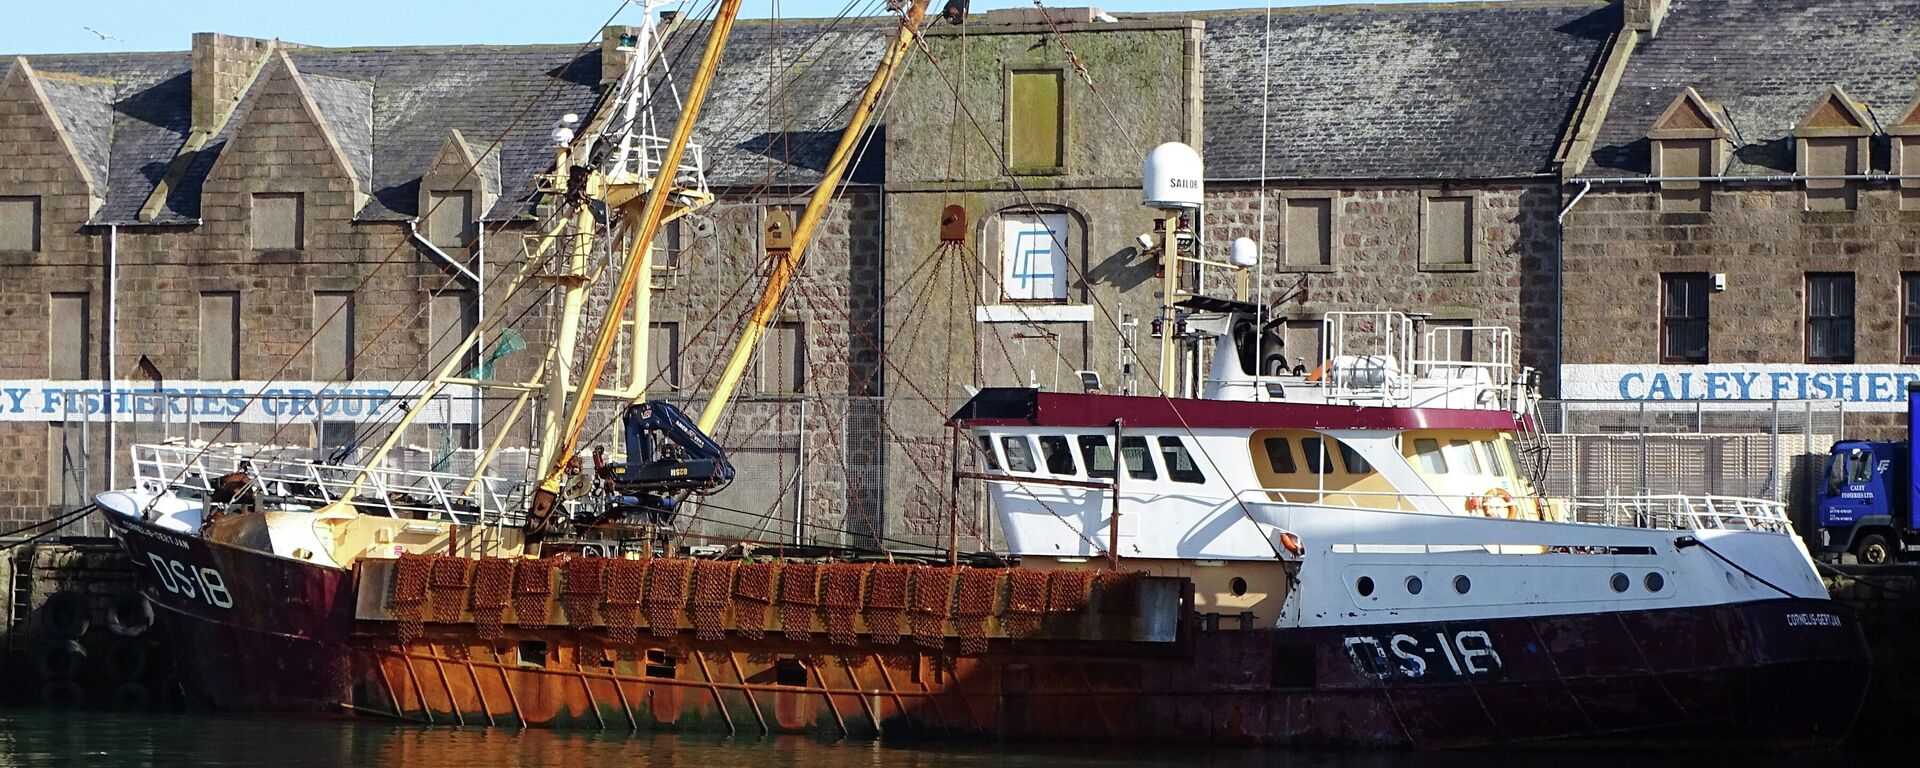 British fishing trawler Cornelis Gert Jan is seen docked in Peterhead, Scotland, Britain around March, 2019 in this social media image. Picture taken sometime in March 2019 - Sputnik International, 1920, 28.10.2021